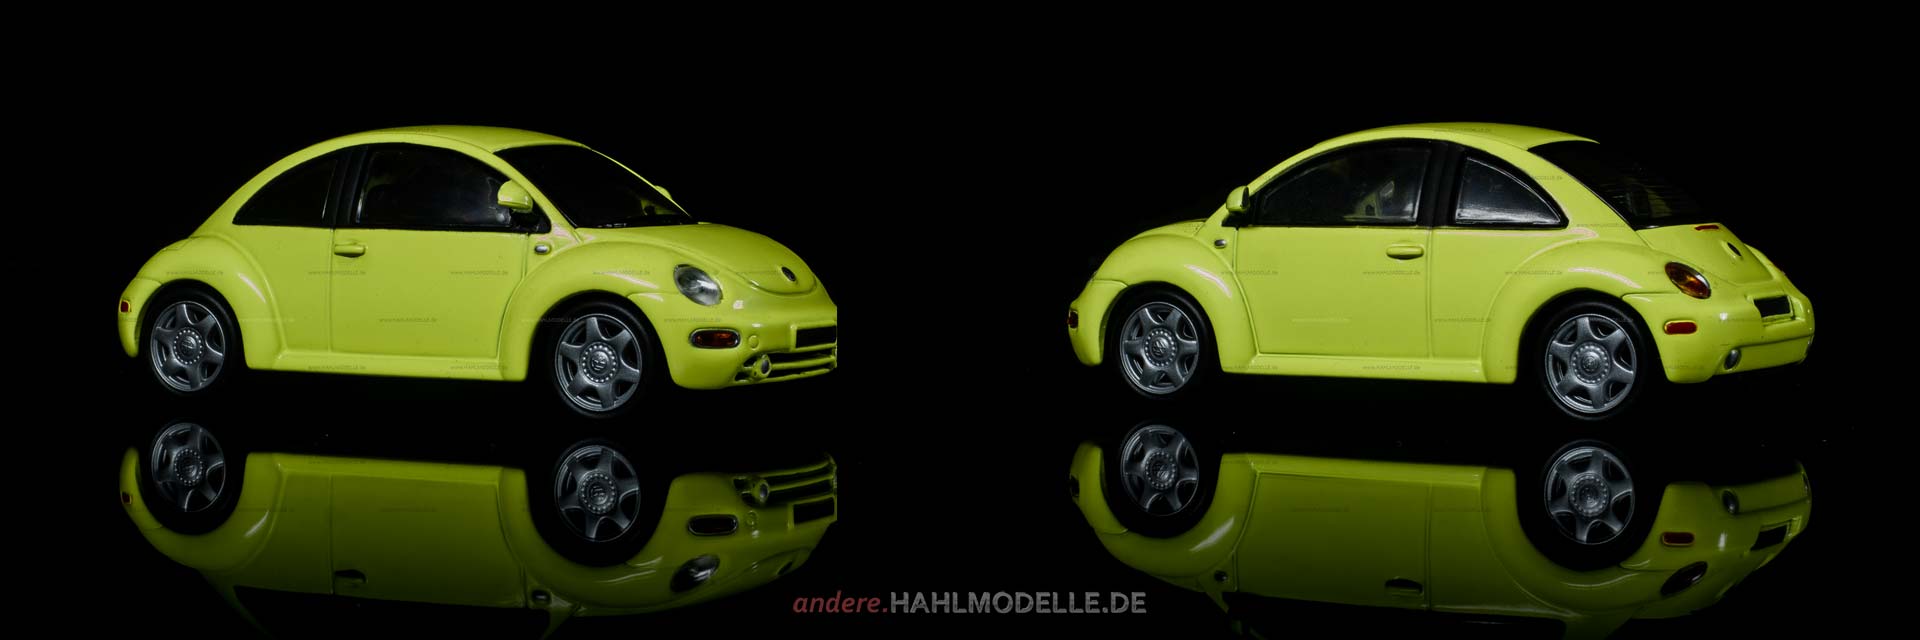 Volkswagen New Beetle (Typ 9c) | Limousine | Ixo (Del Prado Car Collection) | 1:43 | www.andere.hahlmodelle.de